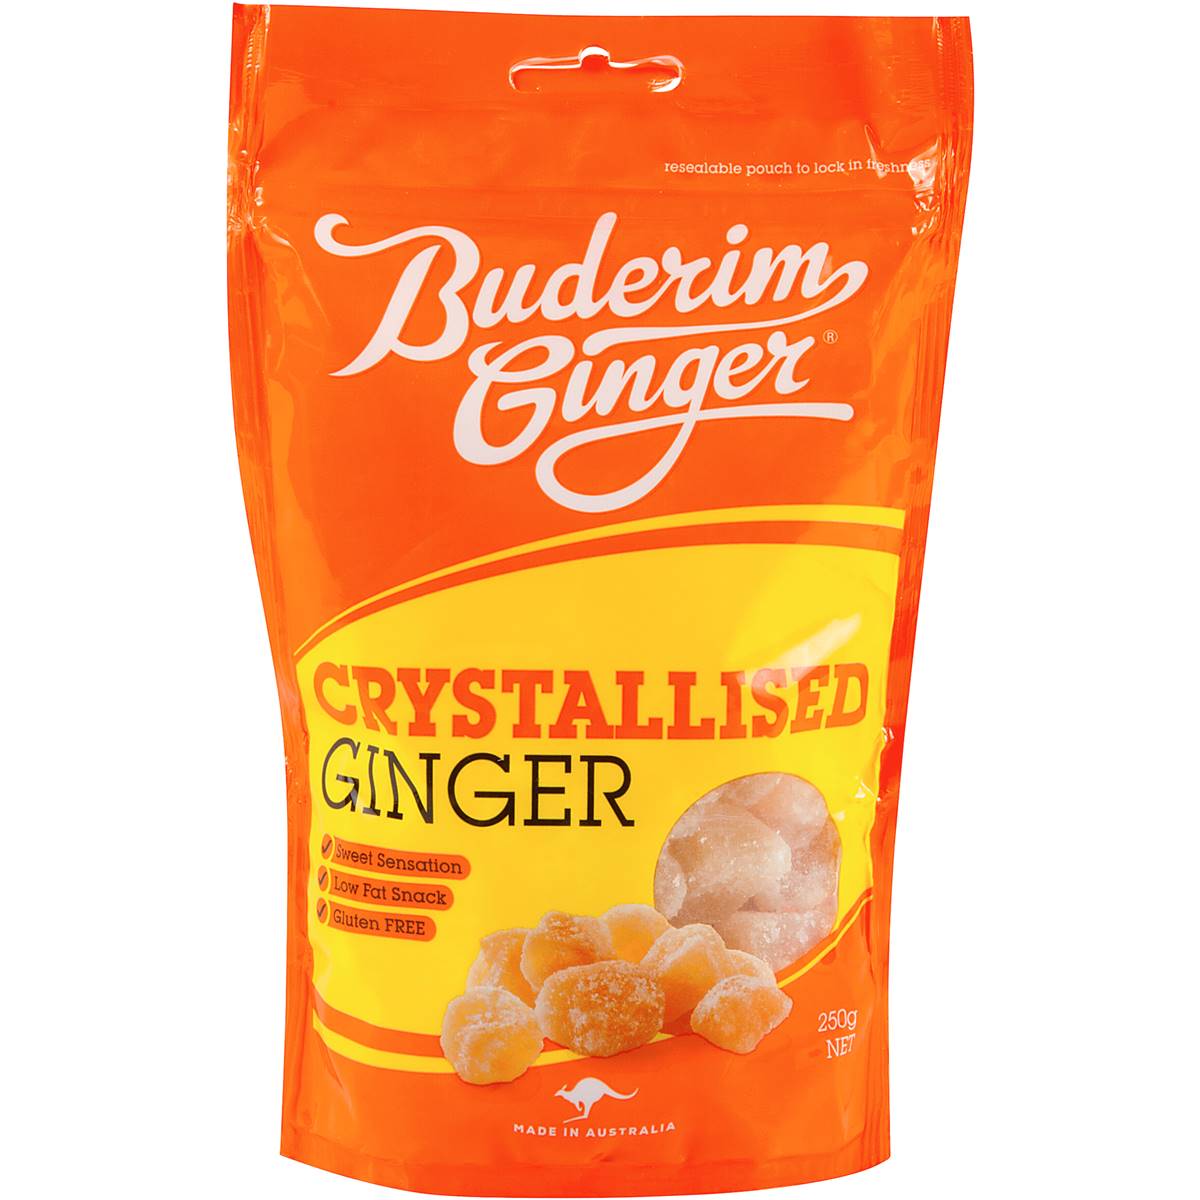 Calories in Buderim Ginger Crystallised